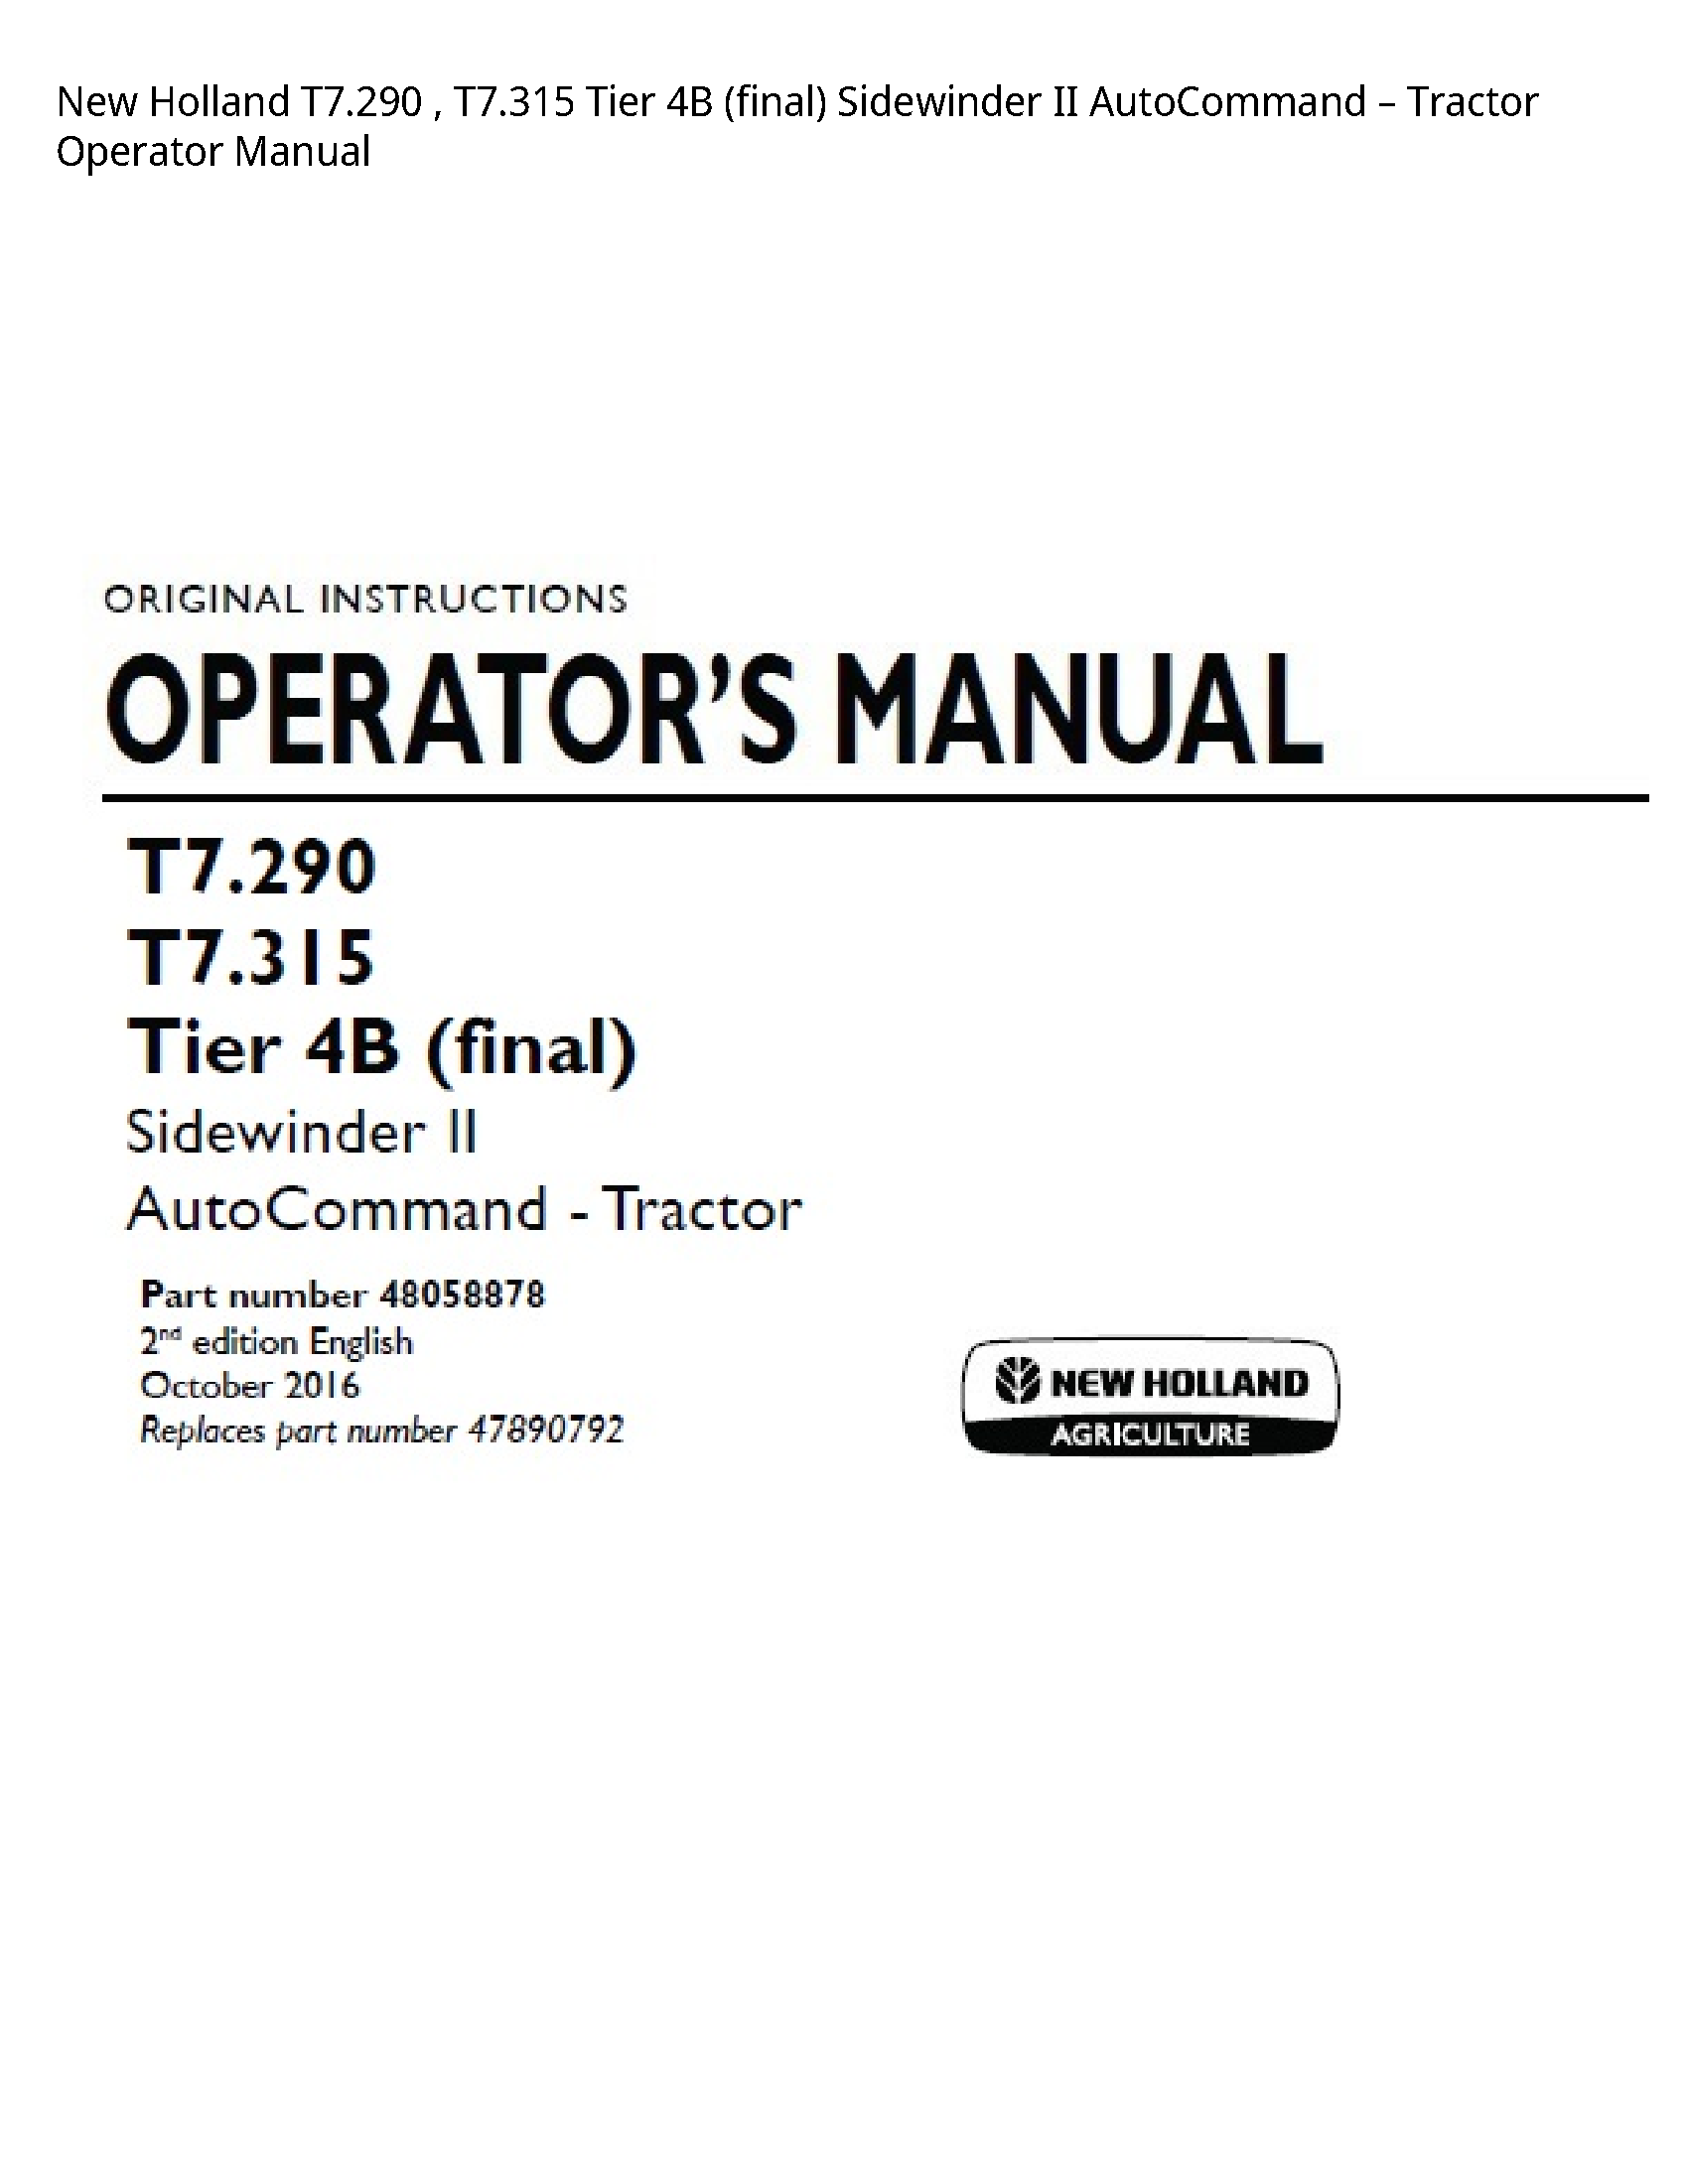 New Holland T7.290 Tier (final) Sidewinder II AutoCommand Tractor Operator manual